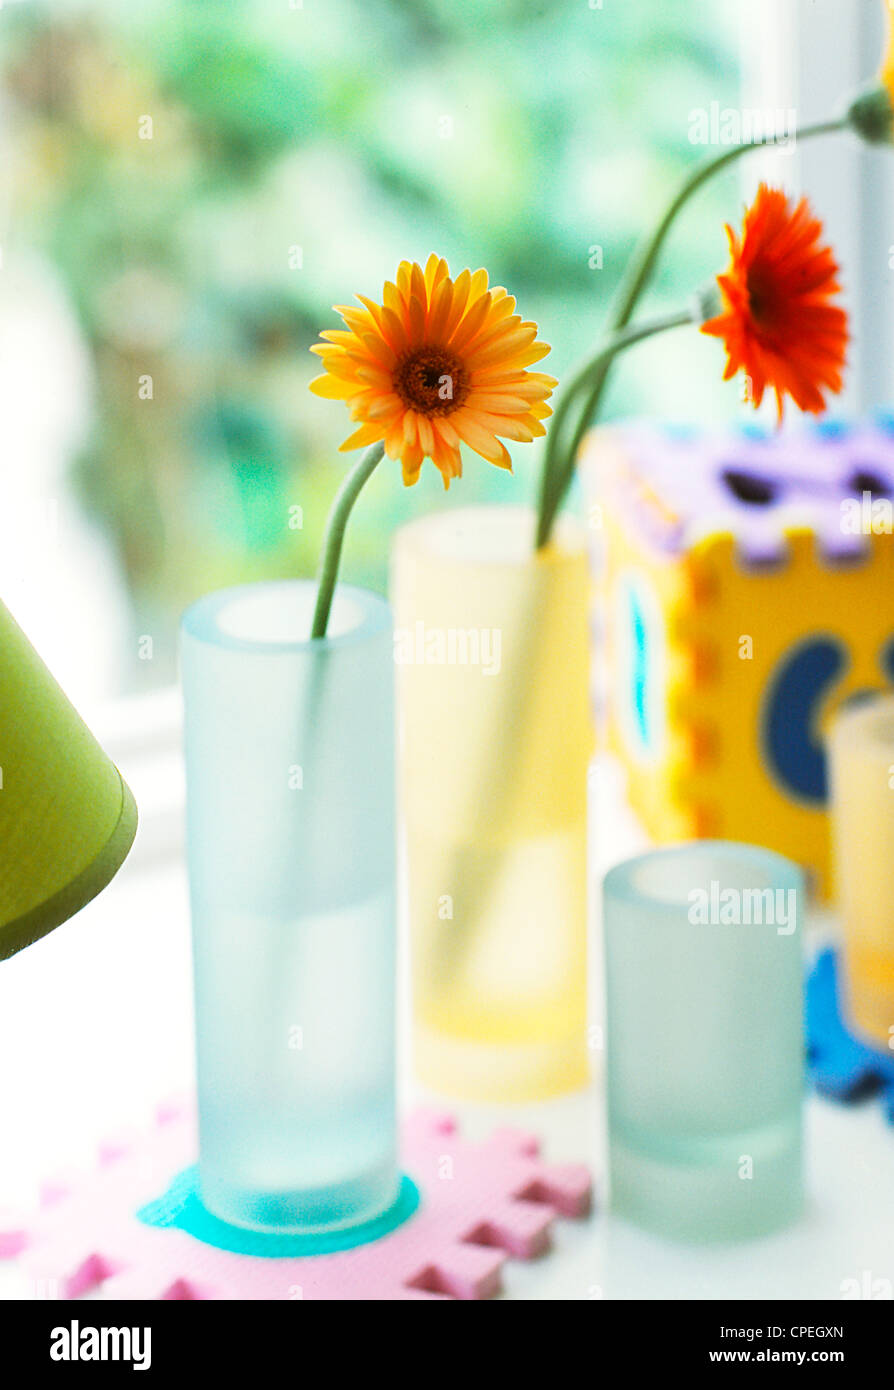 Helle Farbe Daisy Blume In Vase Stockfoto